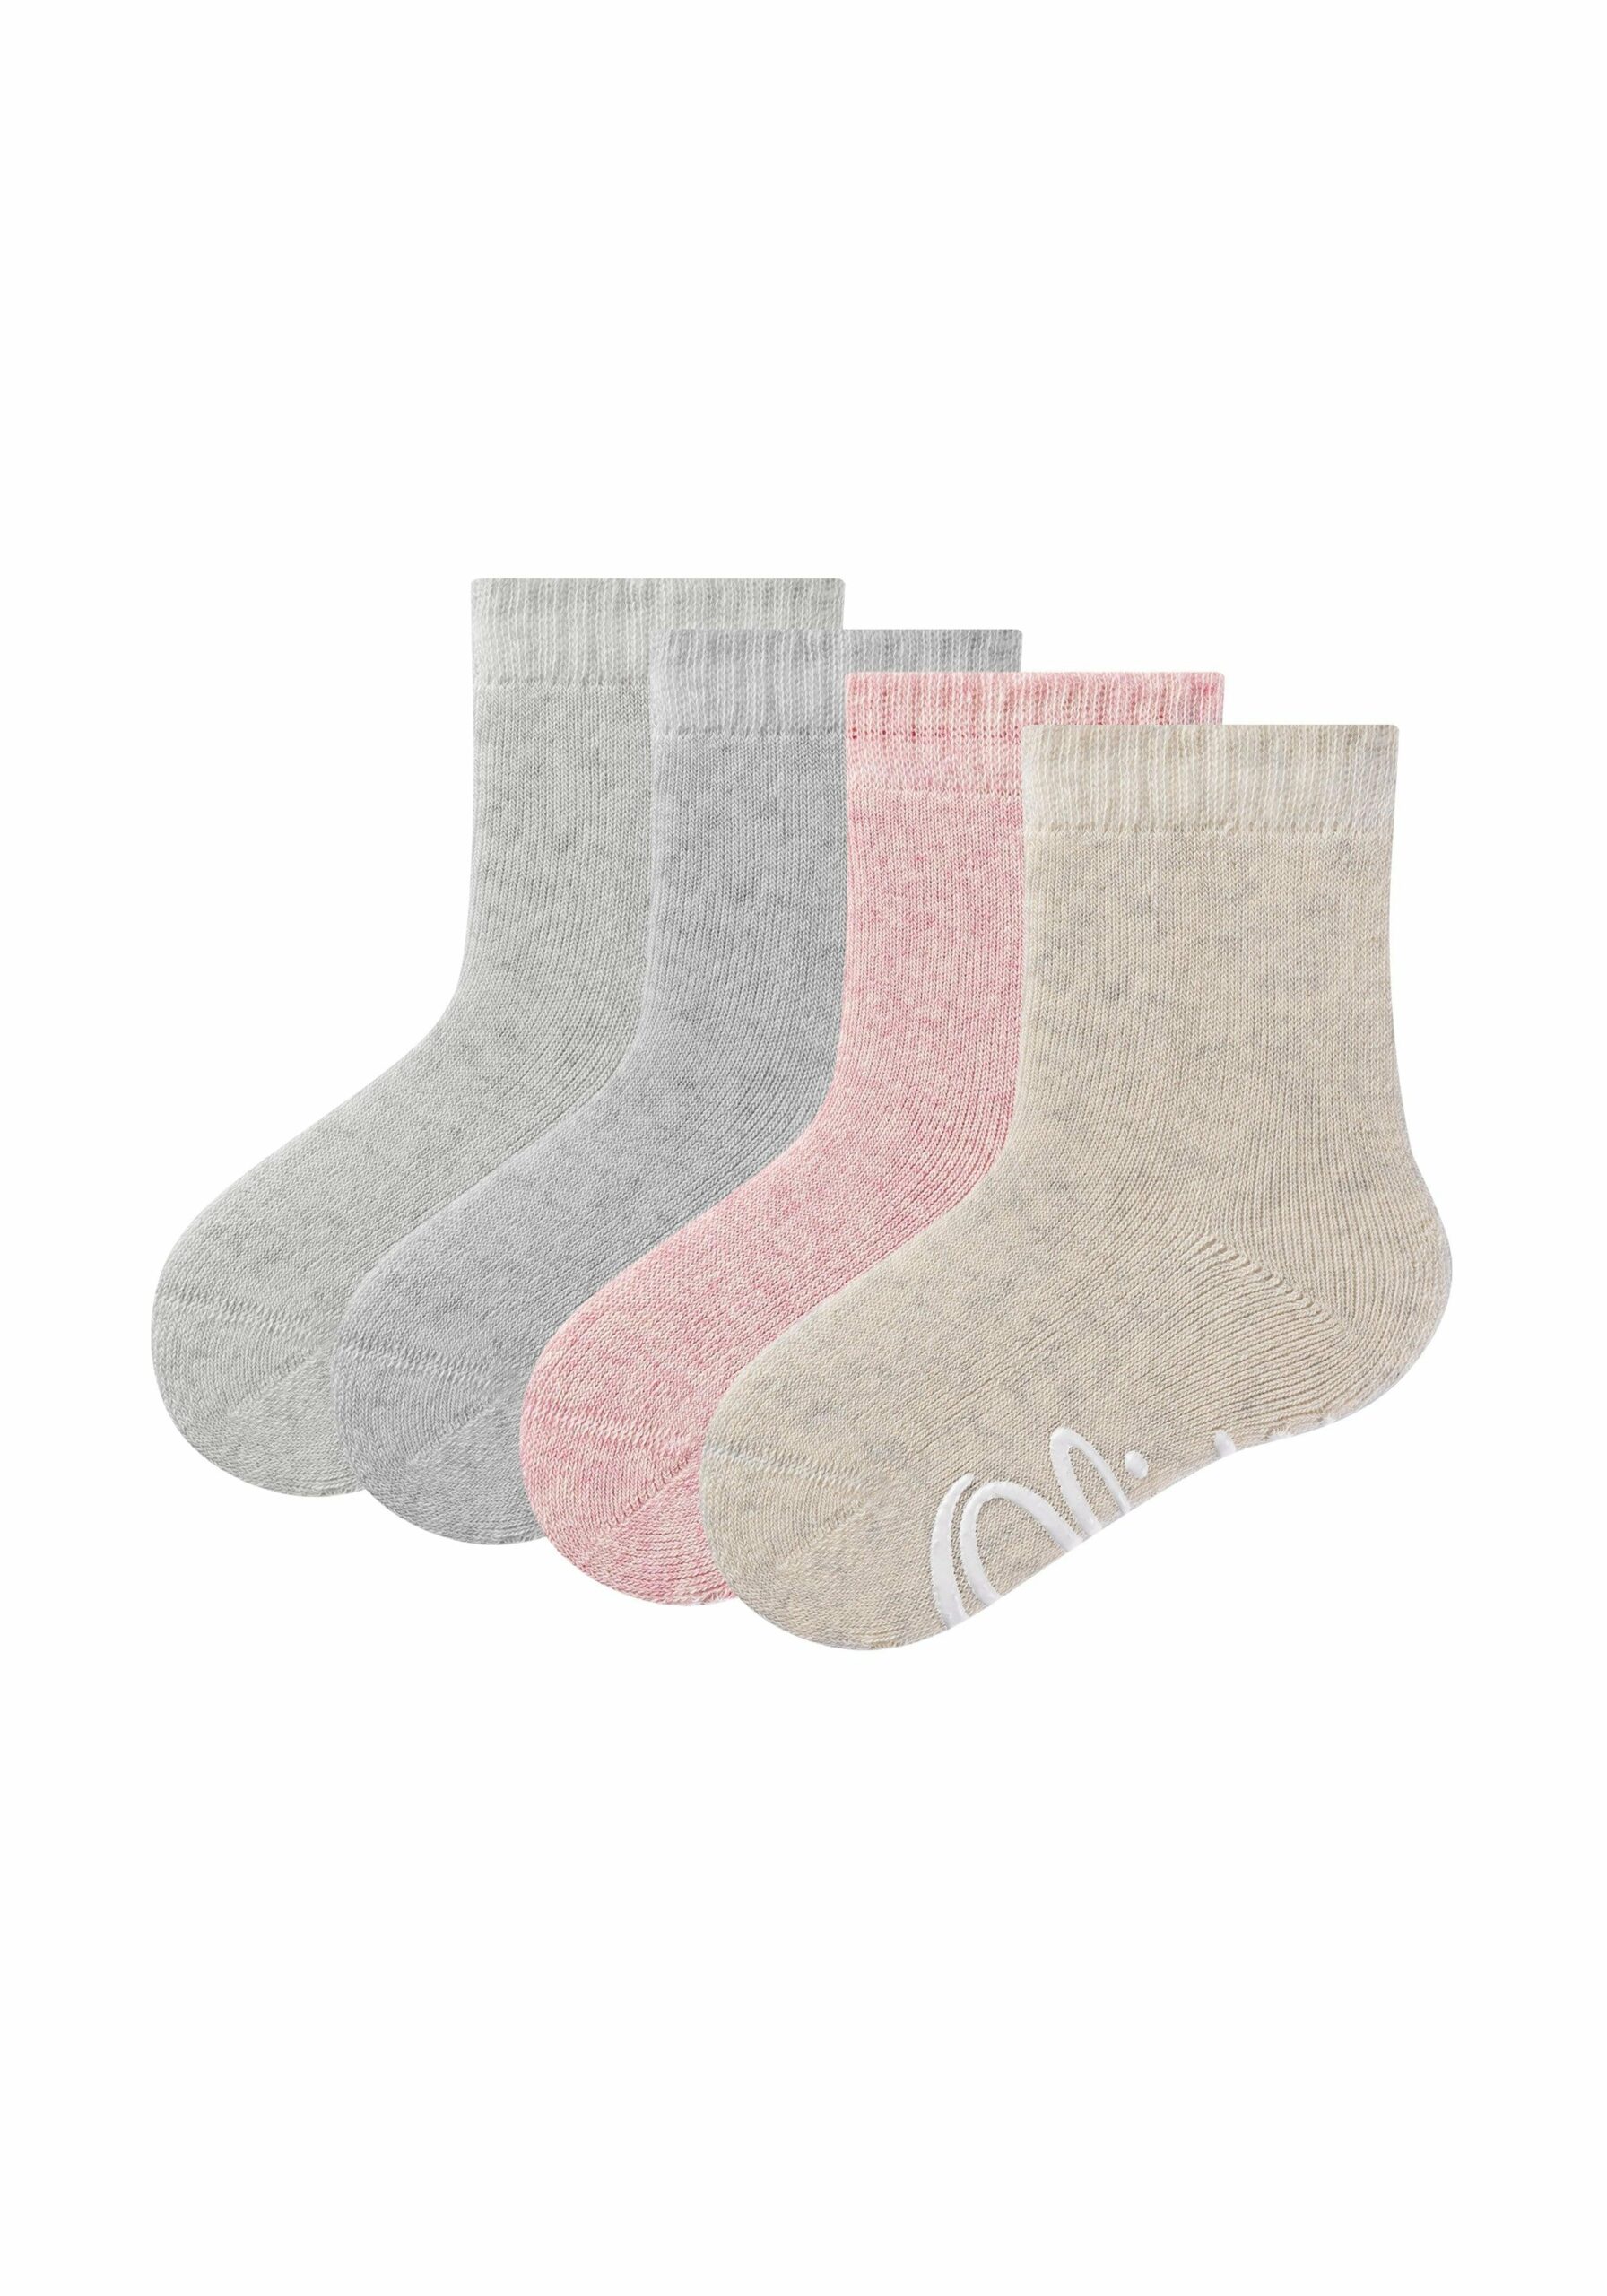 s.Oliver Kinder ABS-Socken Bio-Baumwolle rosé kaufen Pack Originals 4er bei melange